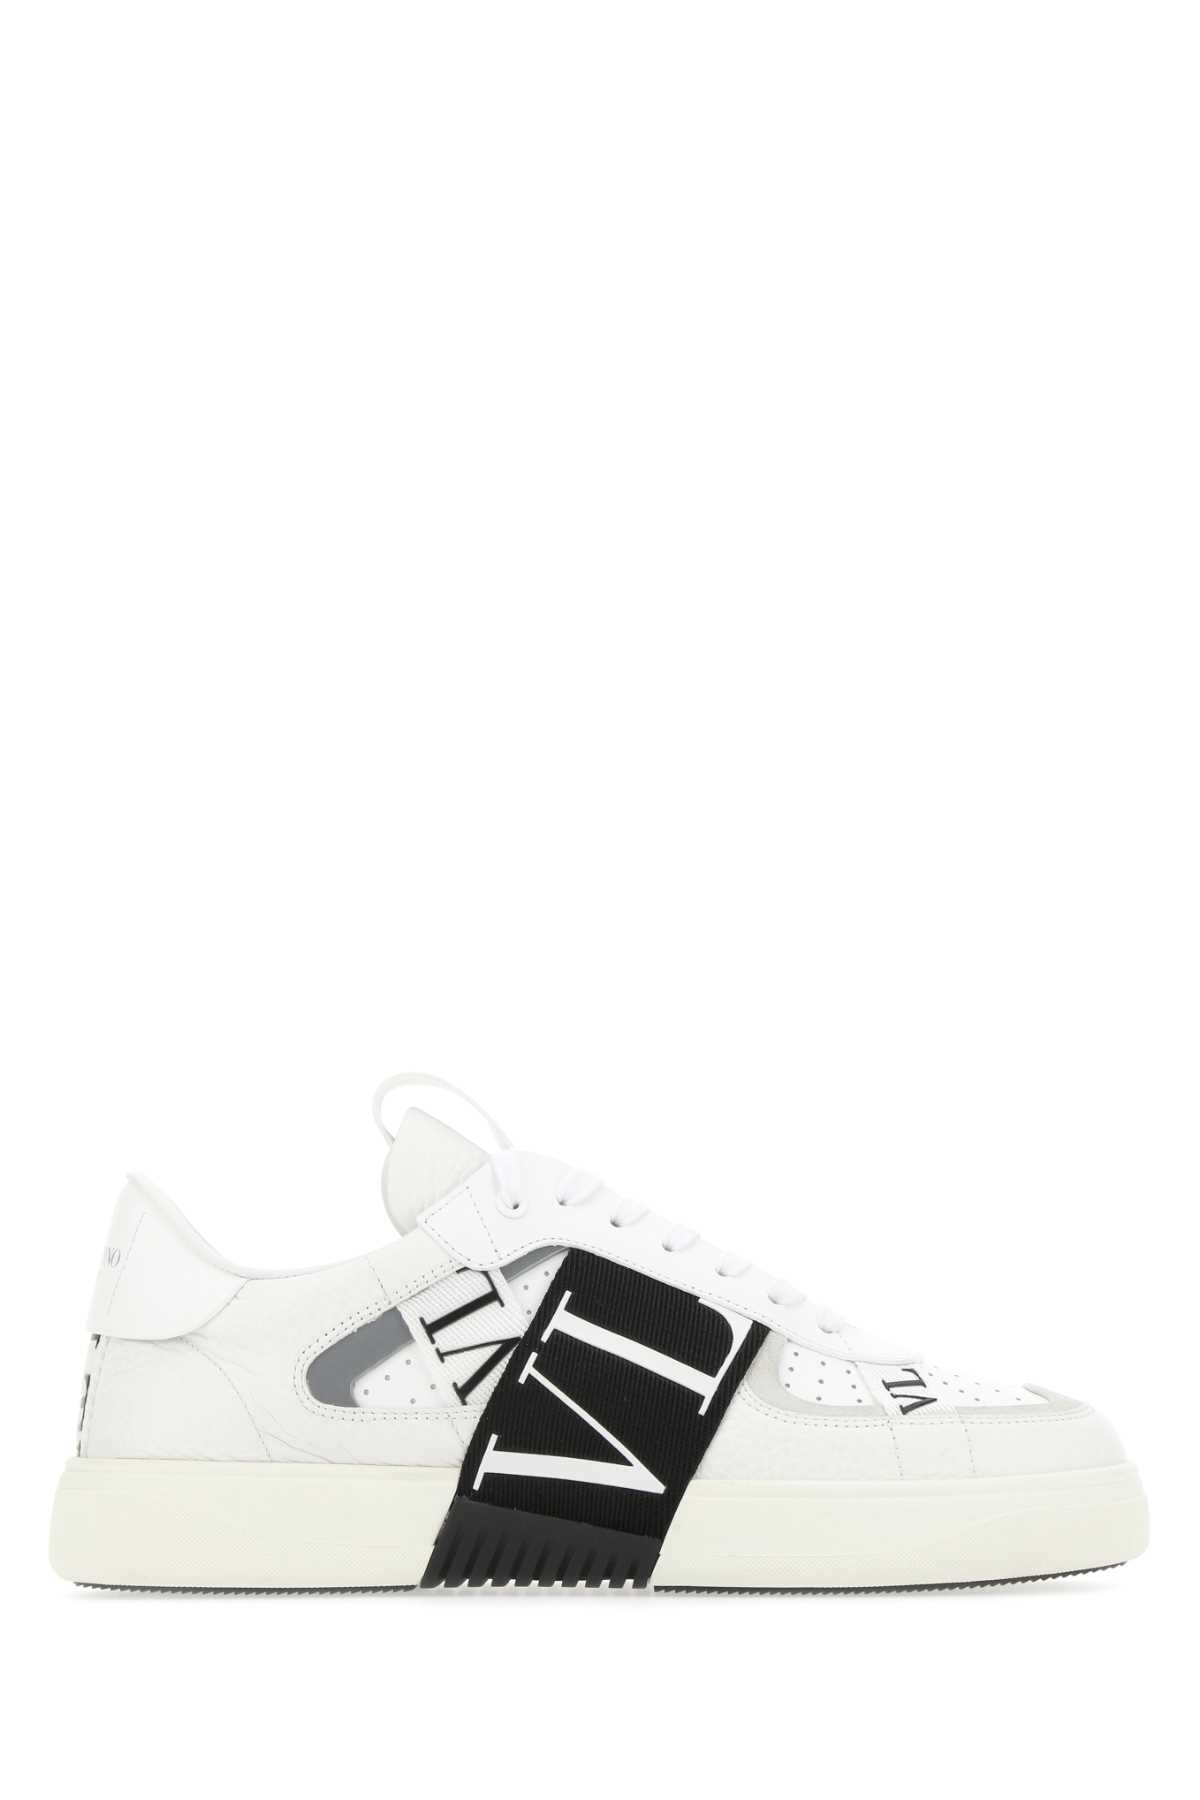 Shop Valentino White Leather Vl7n Sneakers In Bianerbiabiaghia